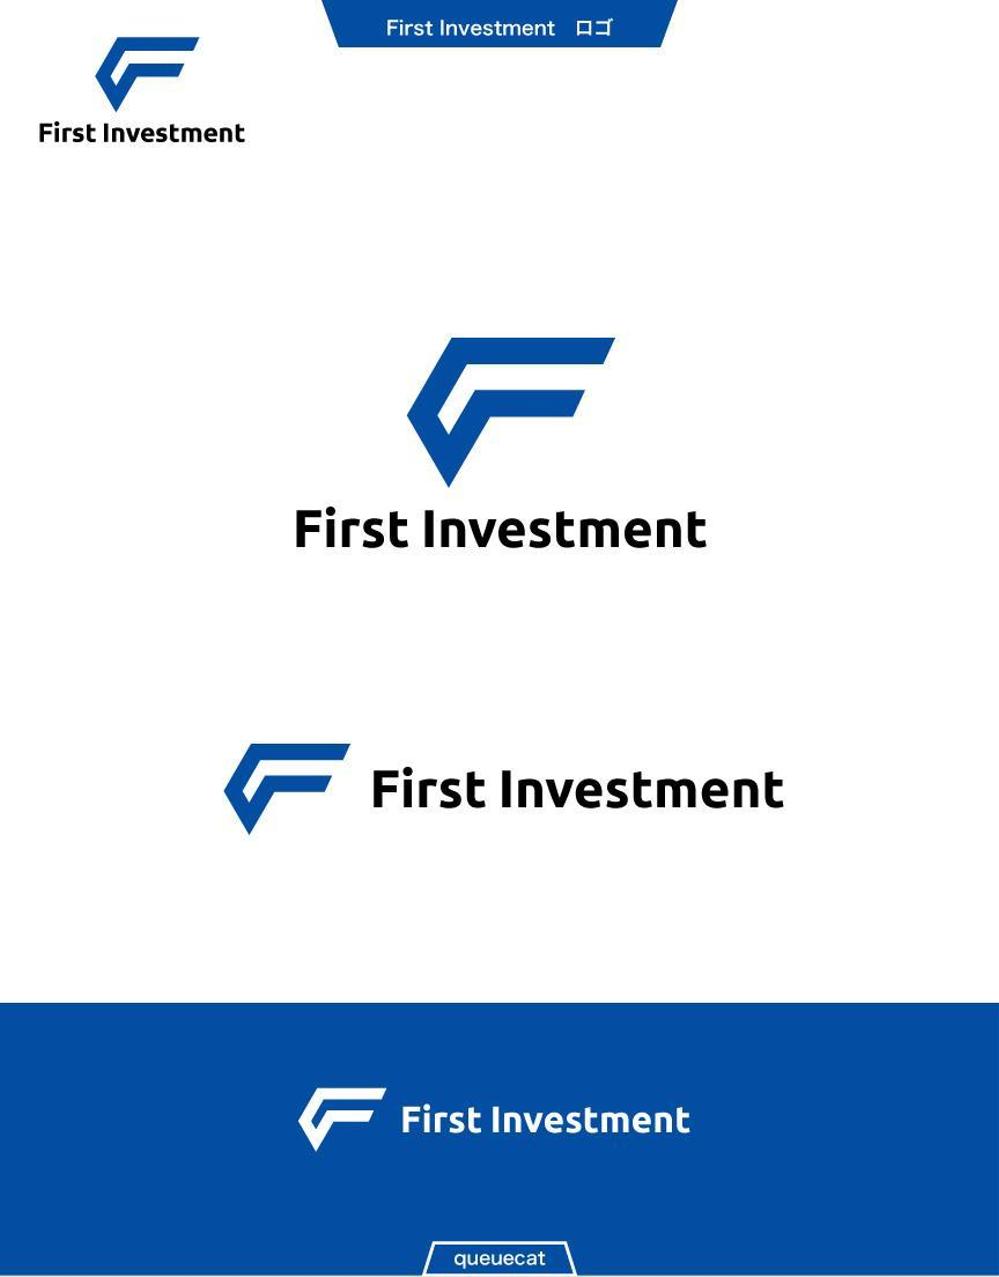 First Investment1_1.jpg